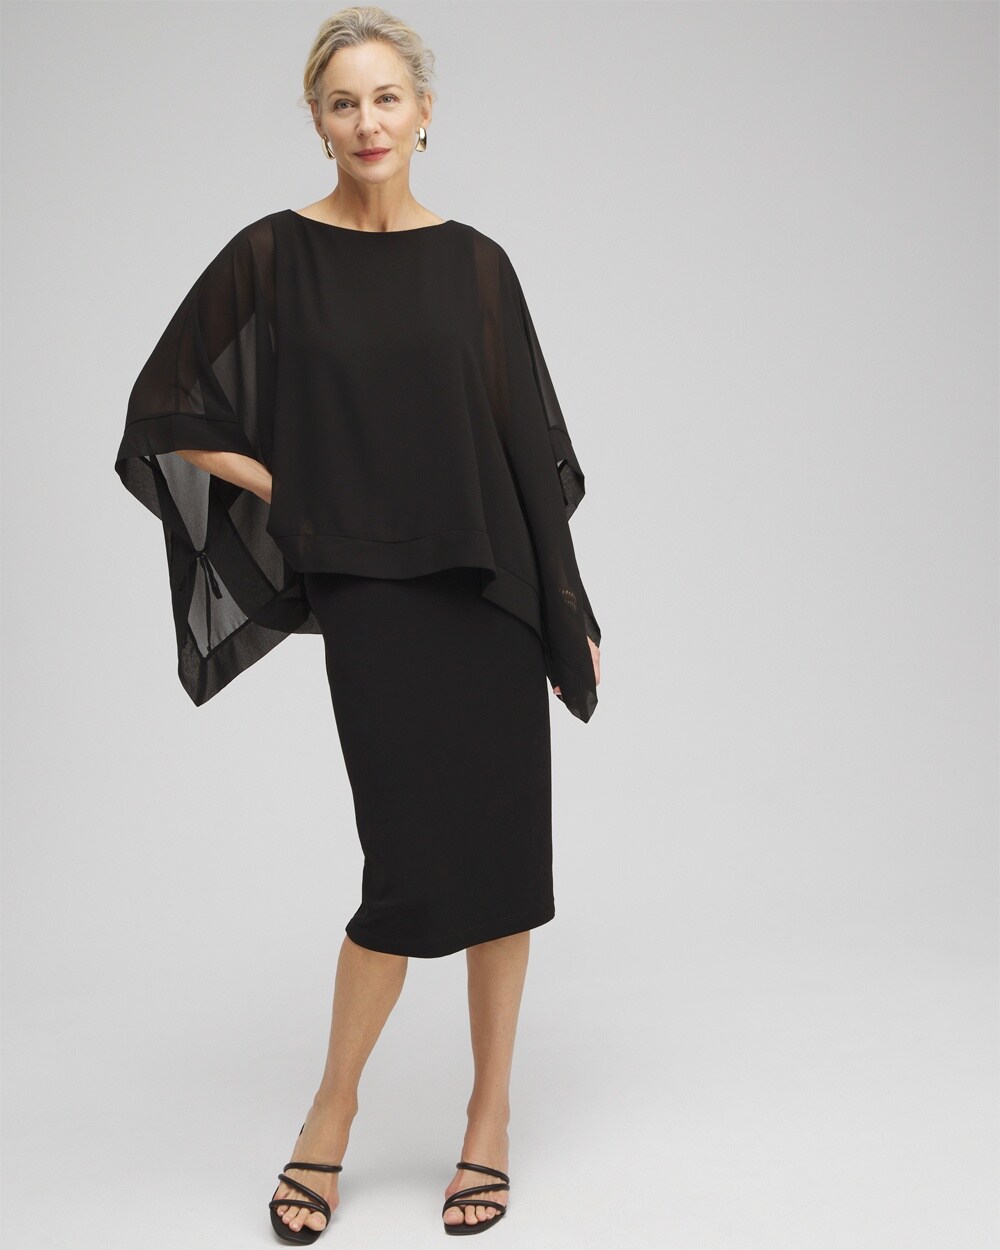 Chico's Wrinkle-free Travelers Chiffon Overlay Dress In Black Size 4/6 |  Travel Clothing